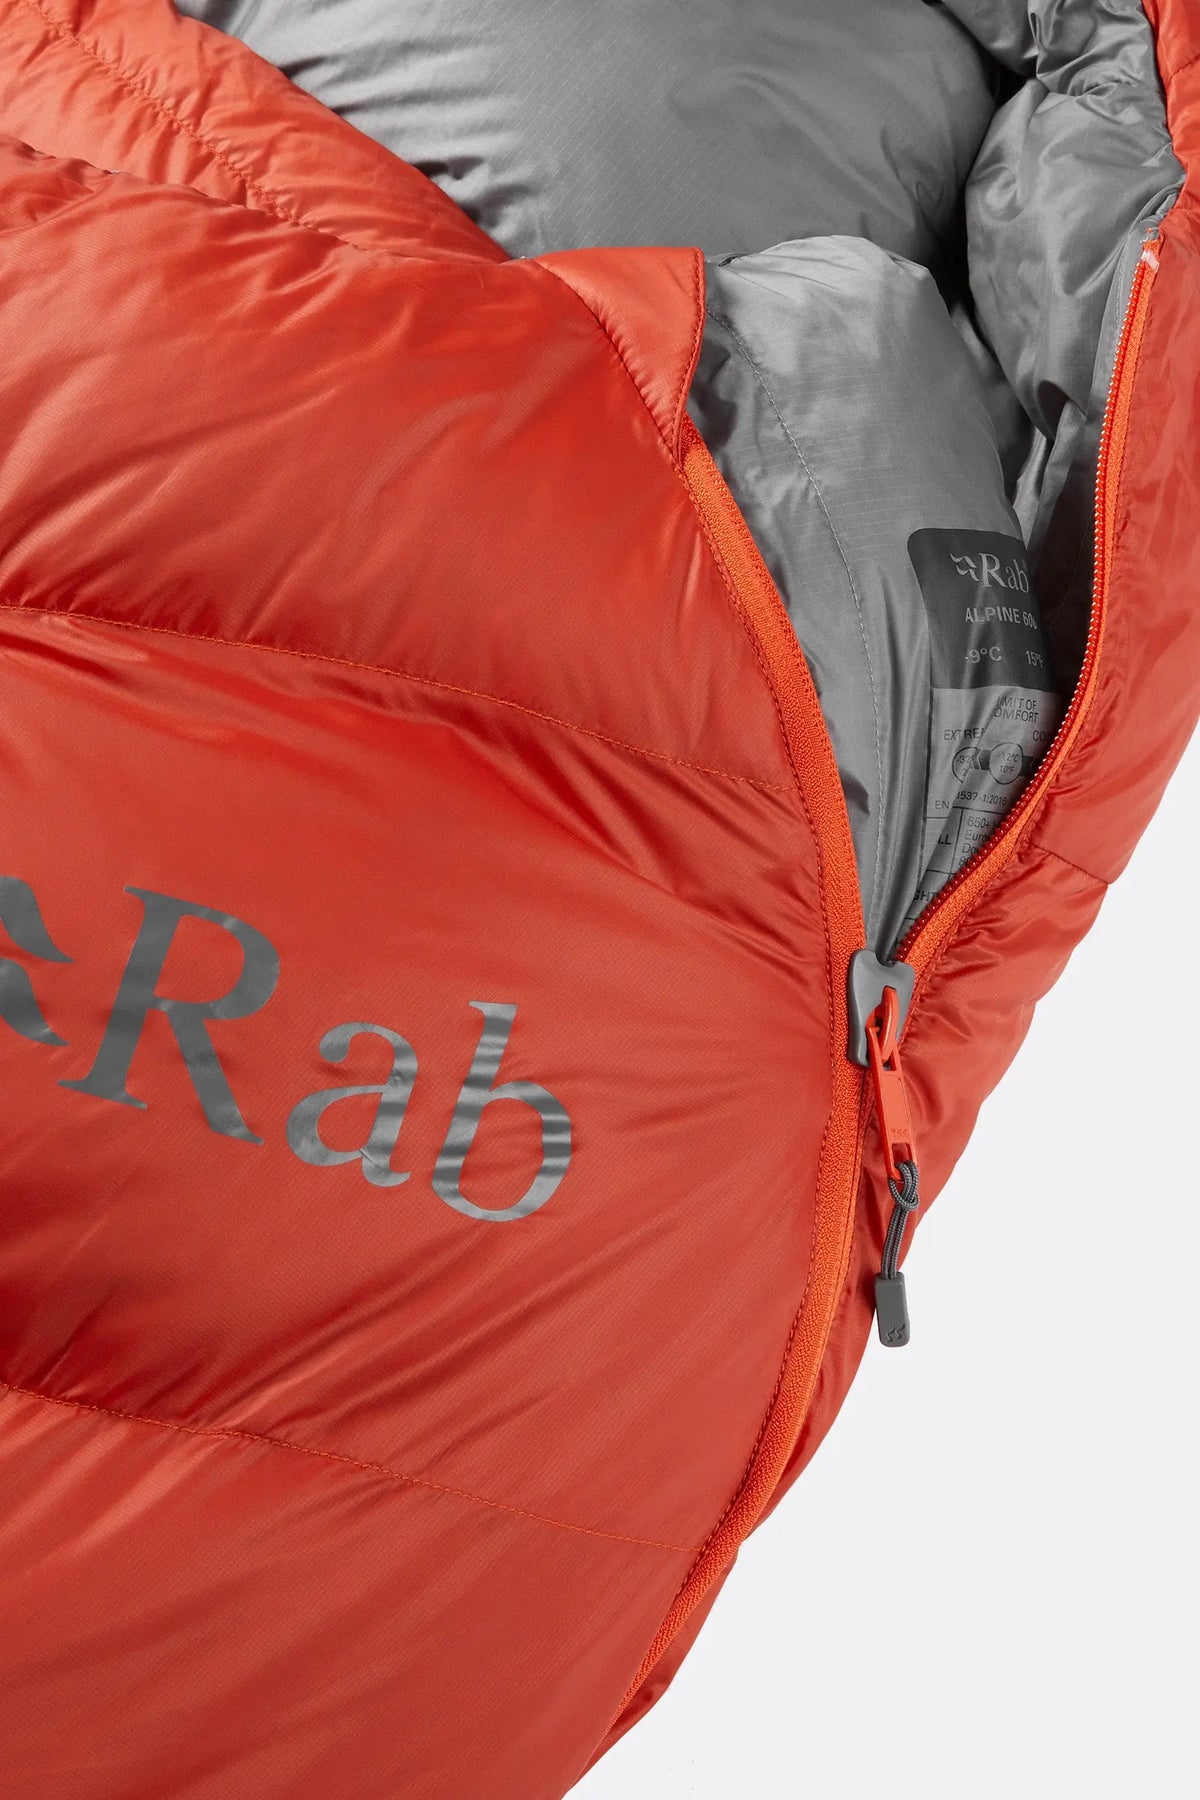 Rab Alpine 600 Down Sleeping Bag (-9c)